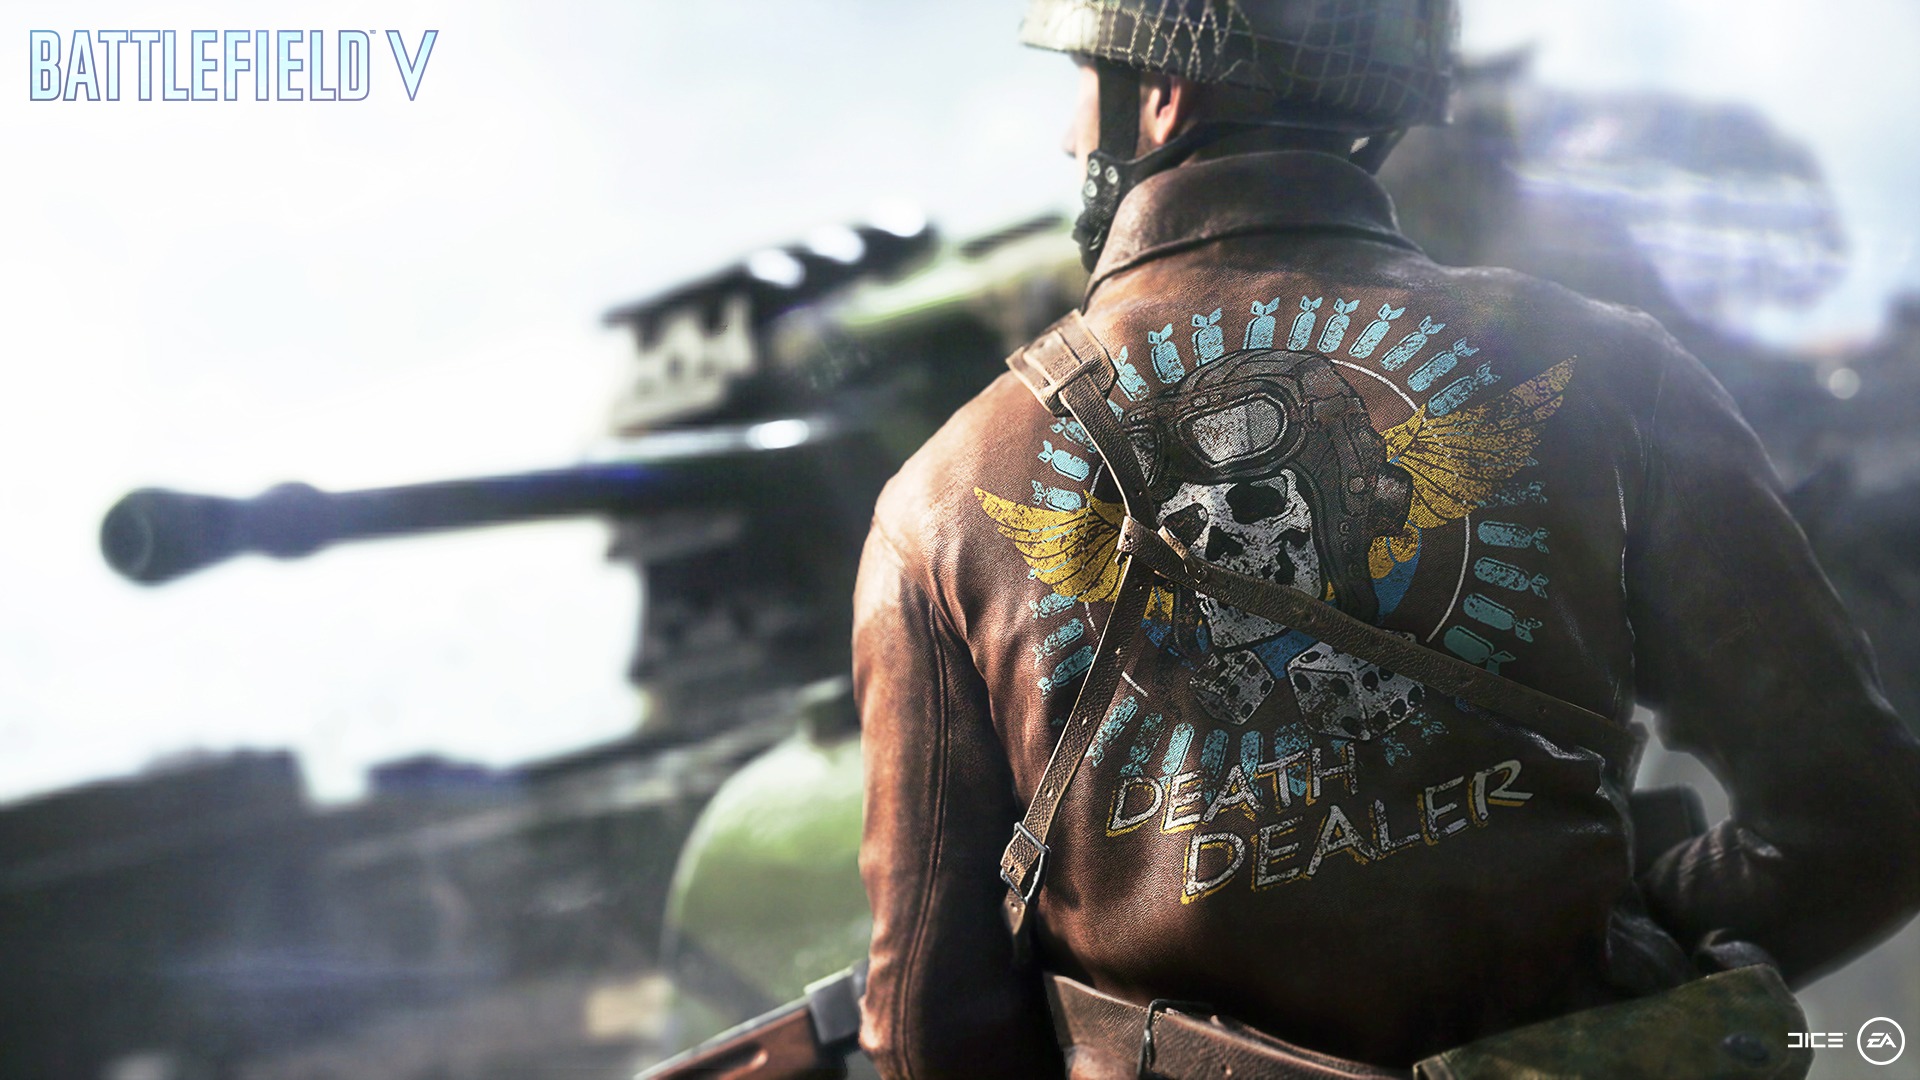 EA dropper digitale skattkister i "Battlefield V".